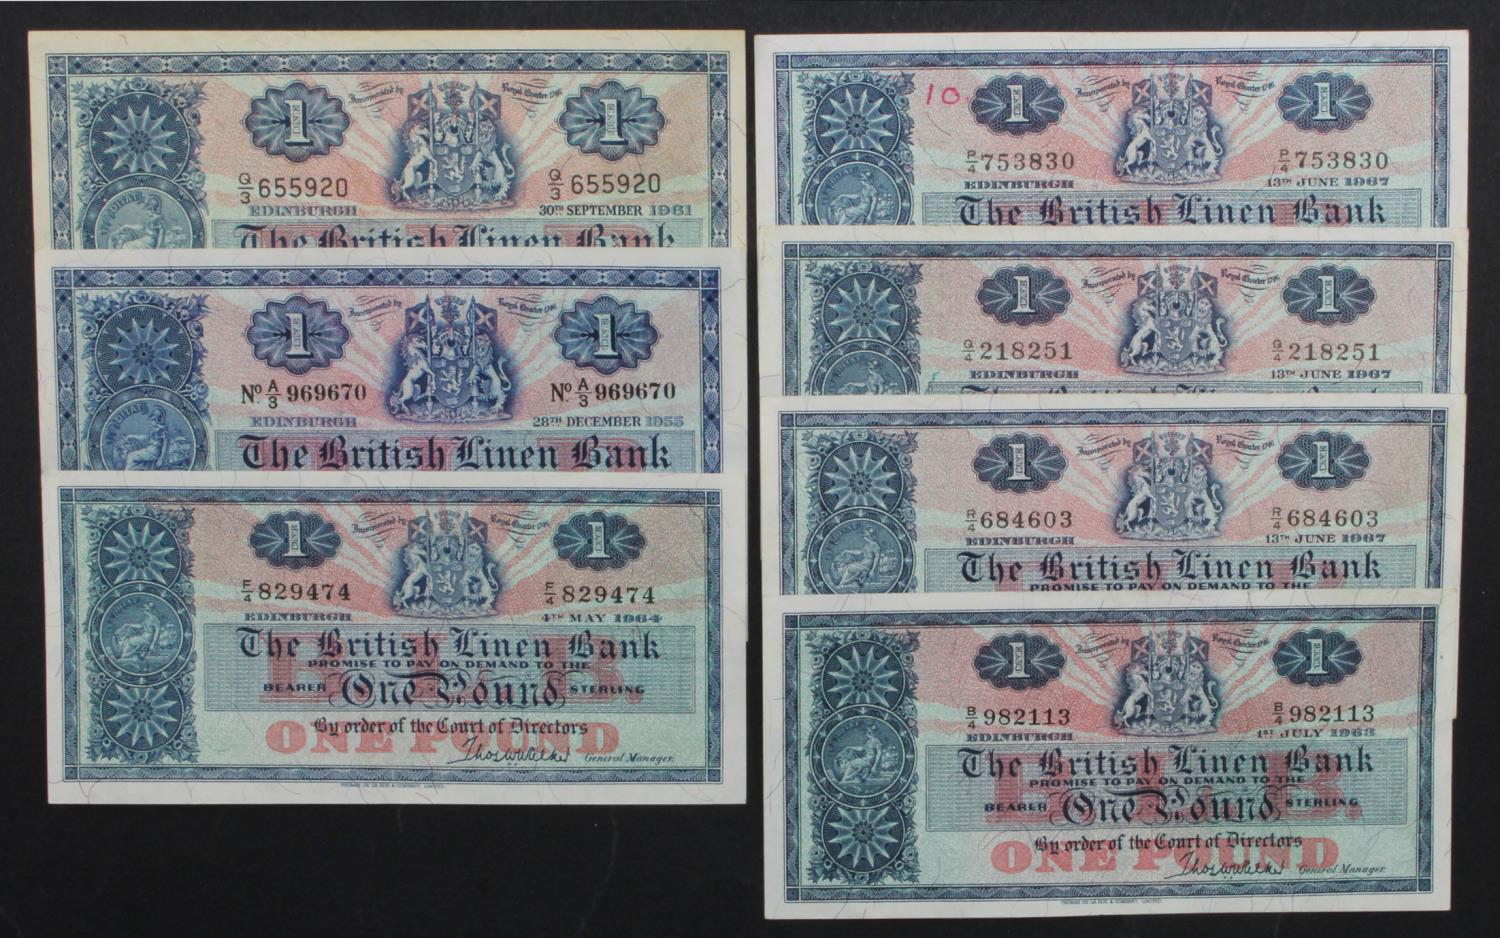 Scotland, British Linen Bank (7), 1 Pound dated 28th December 1955, 1 Pound dated 30th September